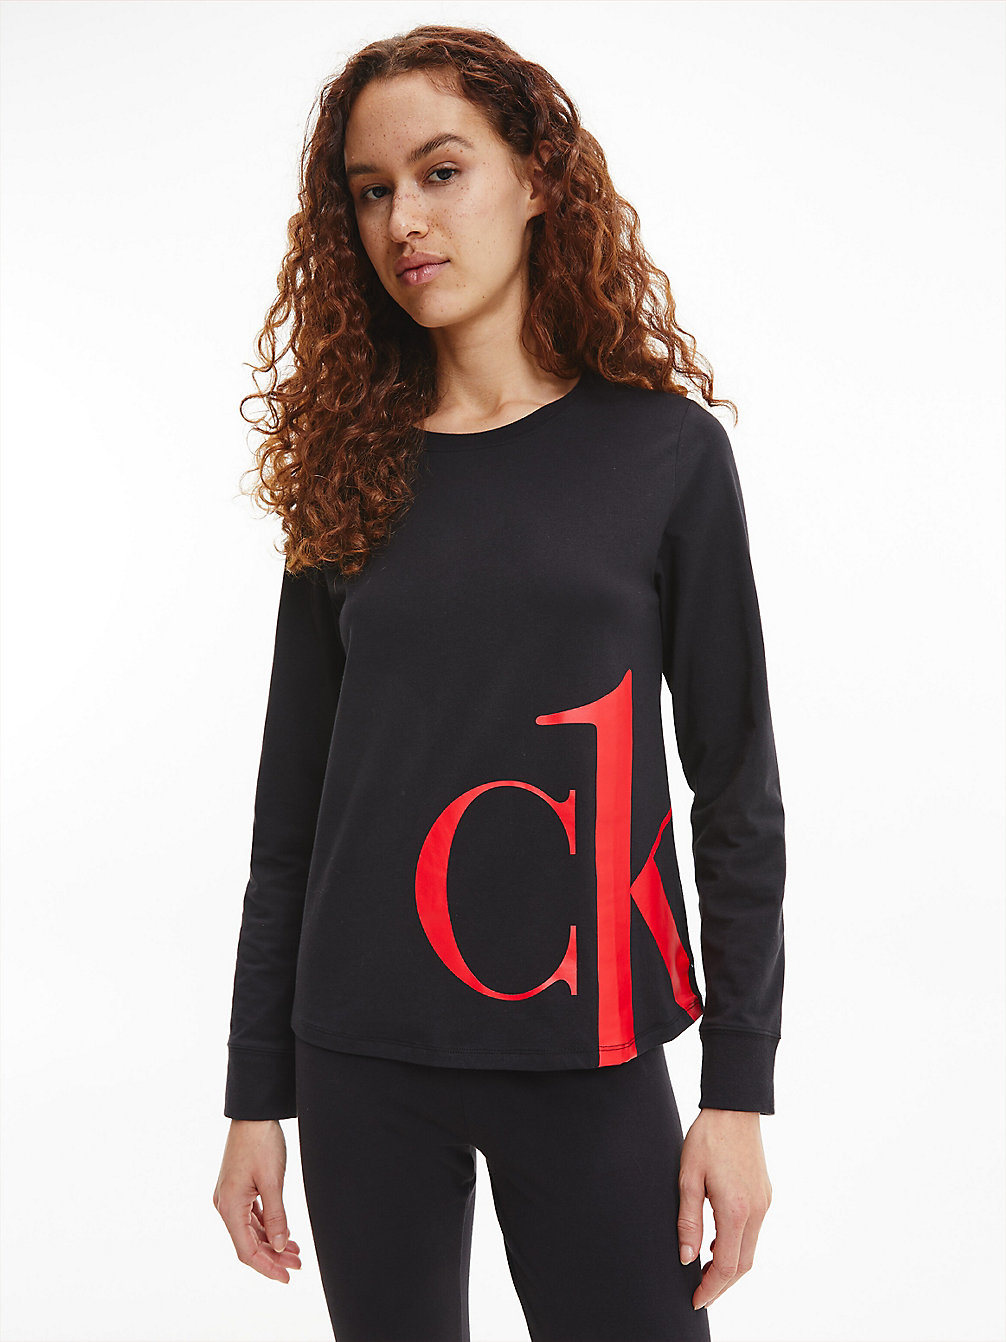 BLACK_EXACT LOGO Pyjama Top - CK One undefined women Calvin Klein